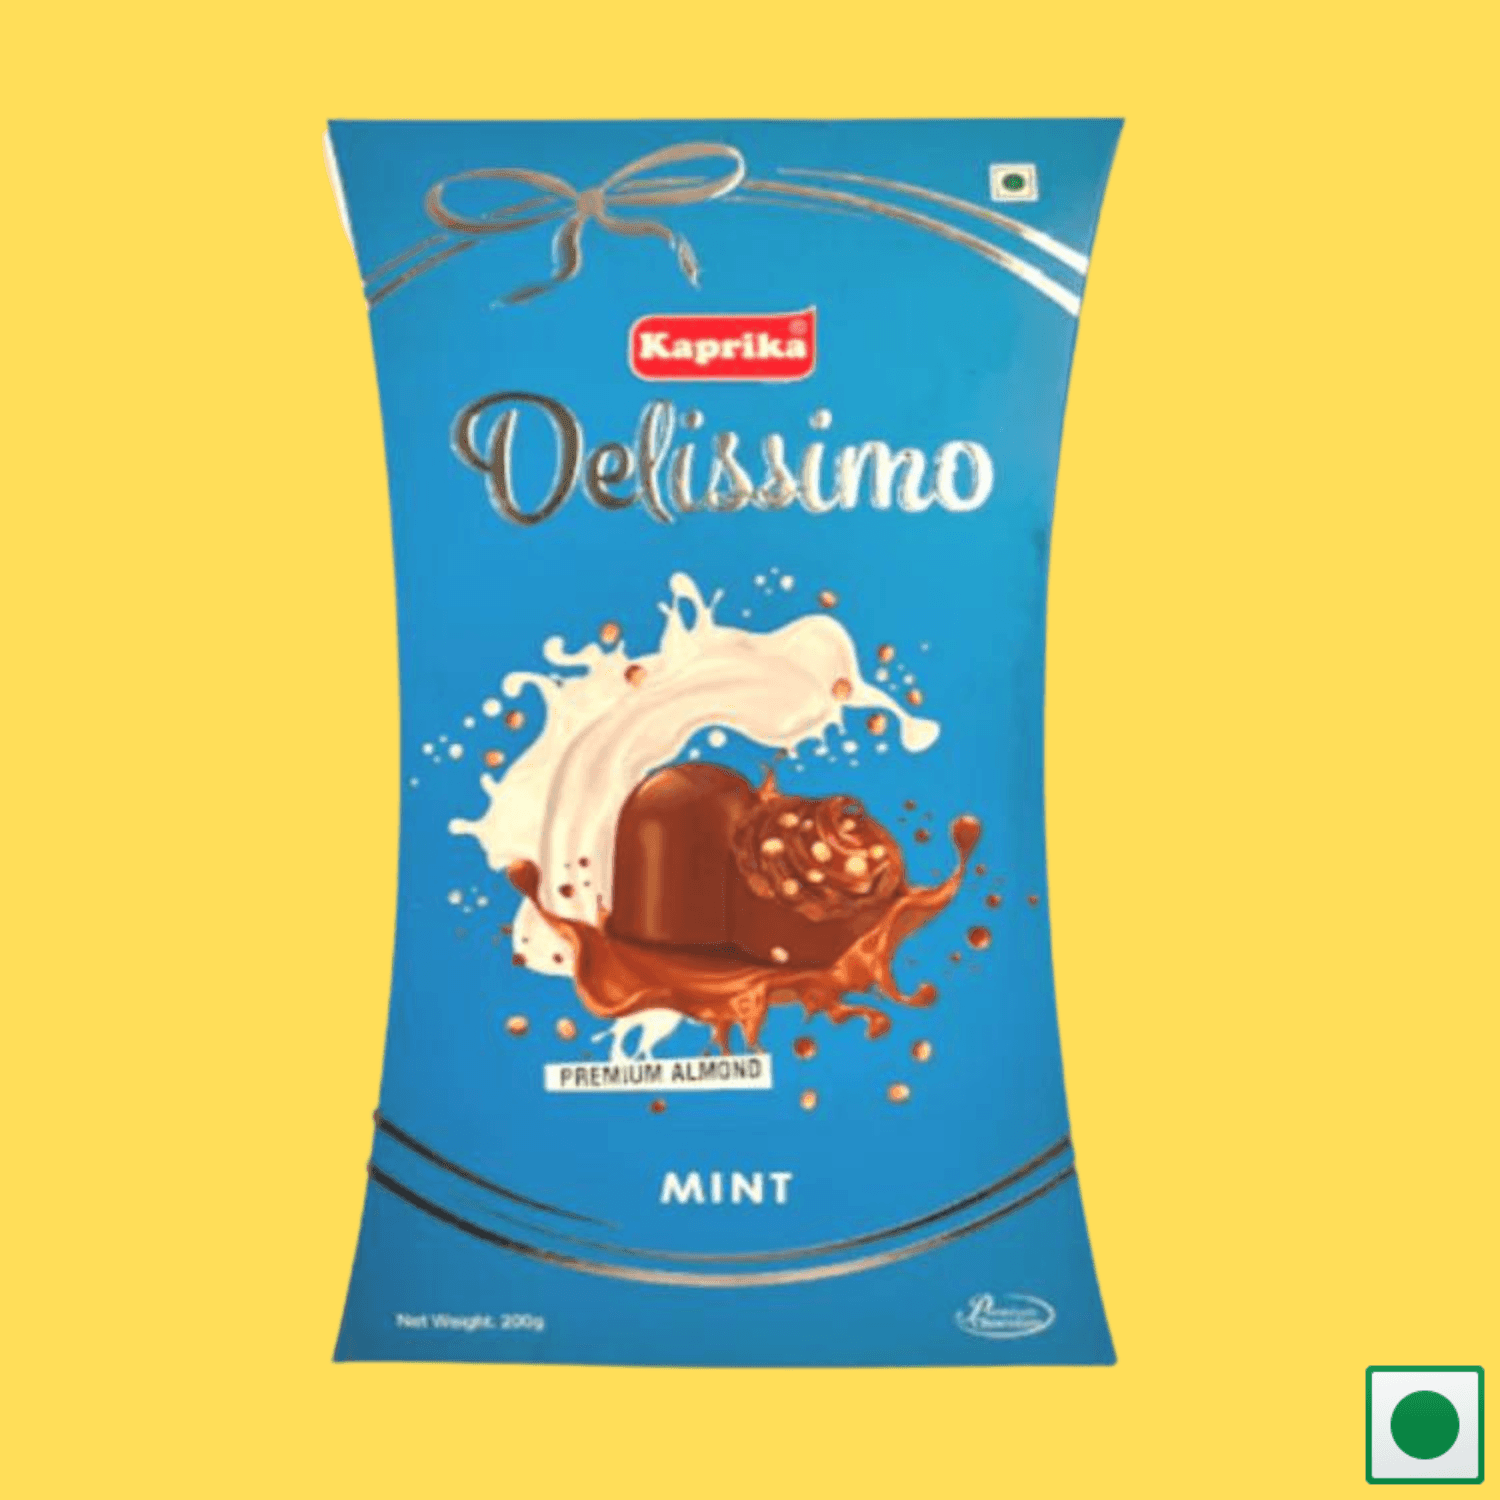 Kaprika Delissimo Premium Mint Chocolate with Almond Crumbs, 200g - Super 7 Mart